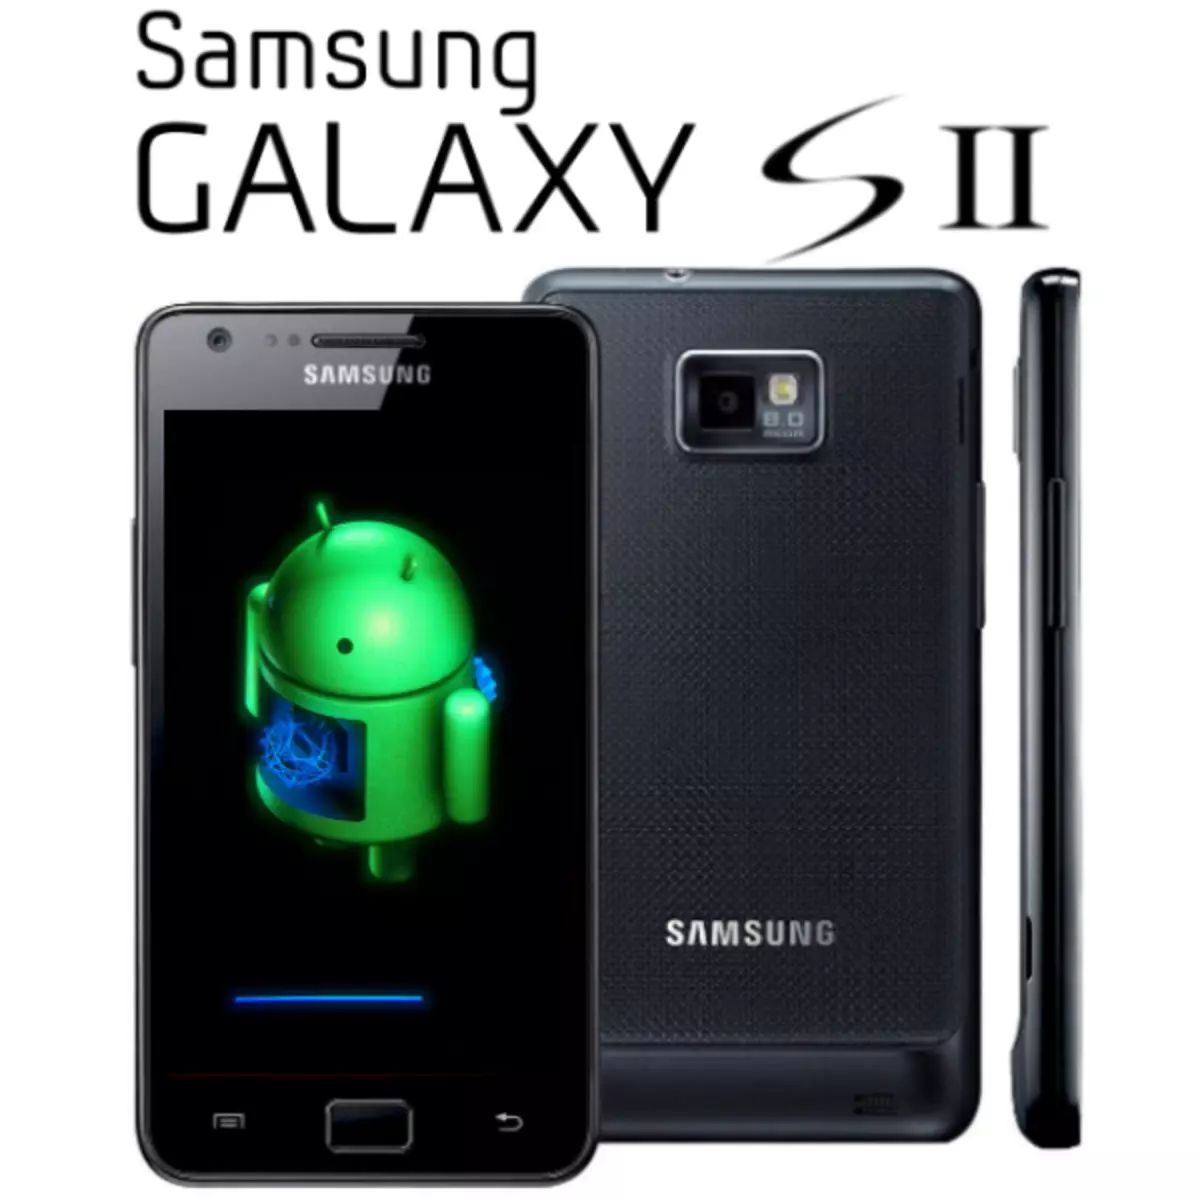 Samsung Galaxy S 2 GT-I9100 Firmware